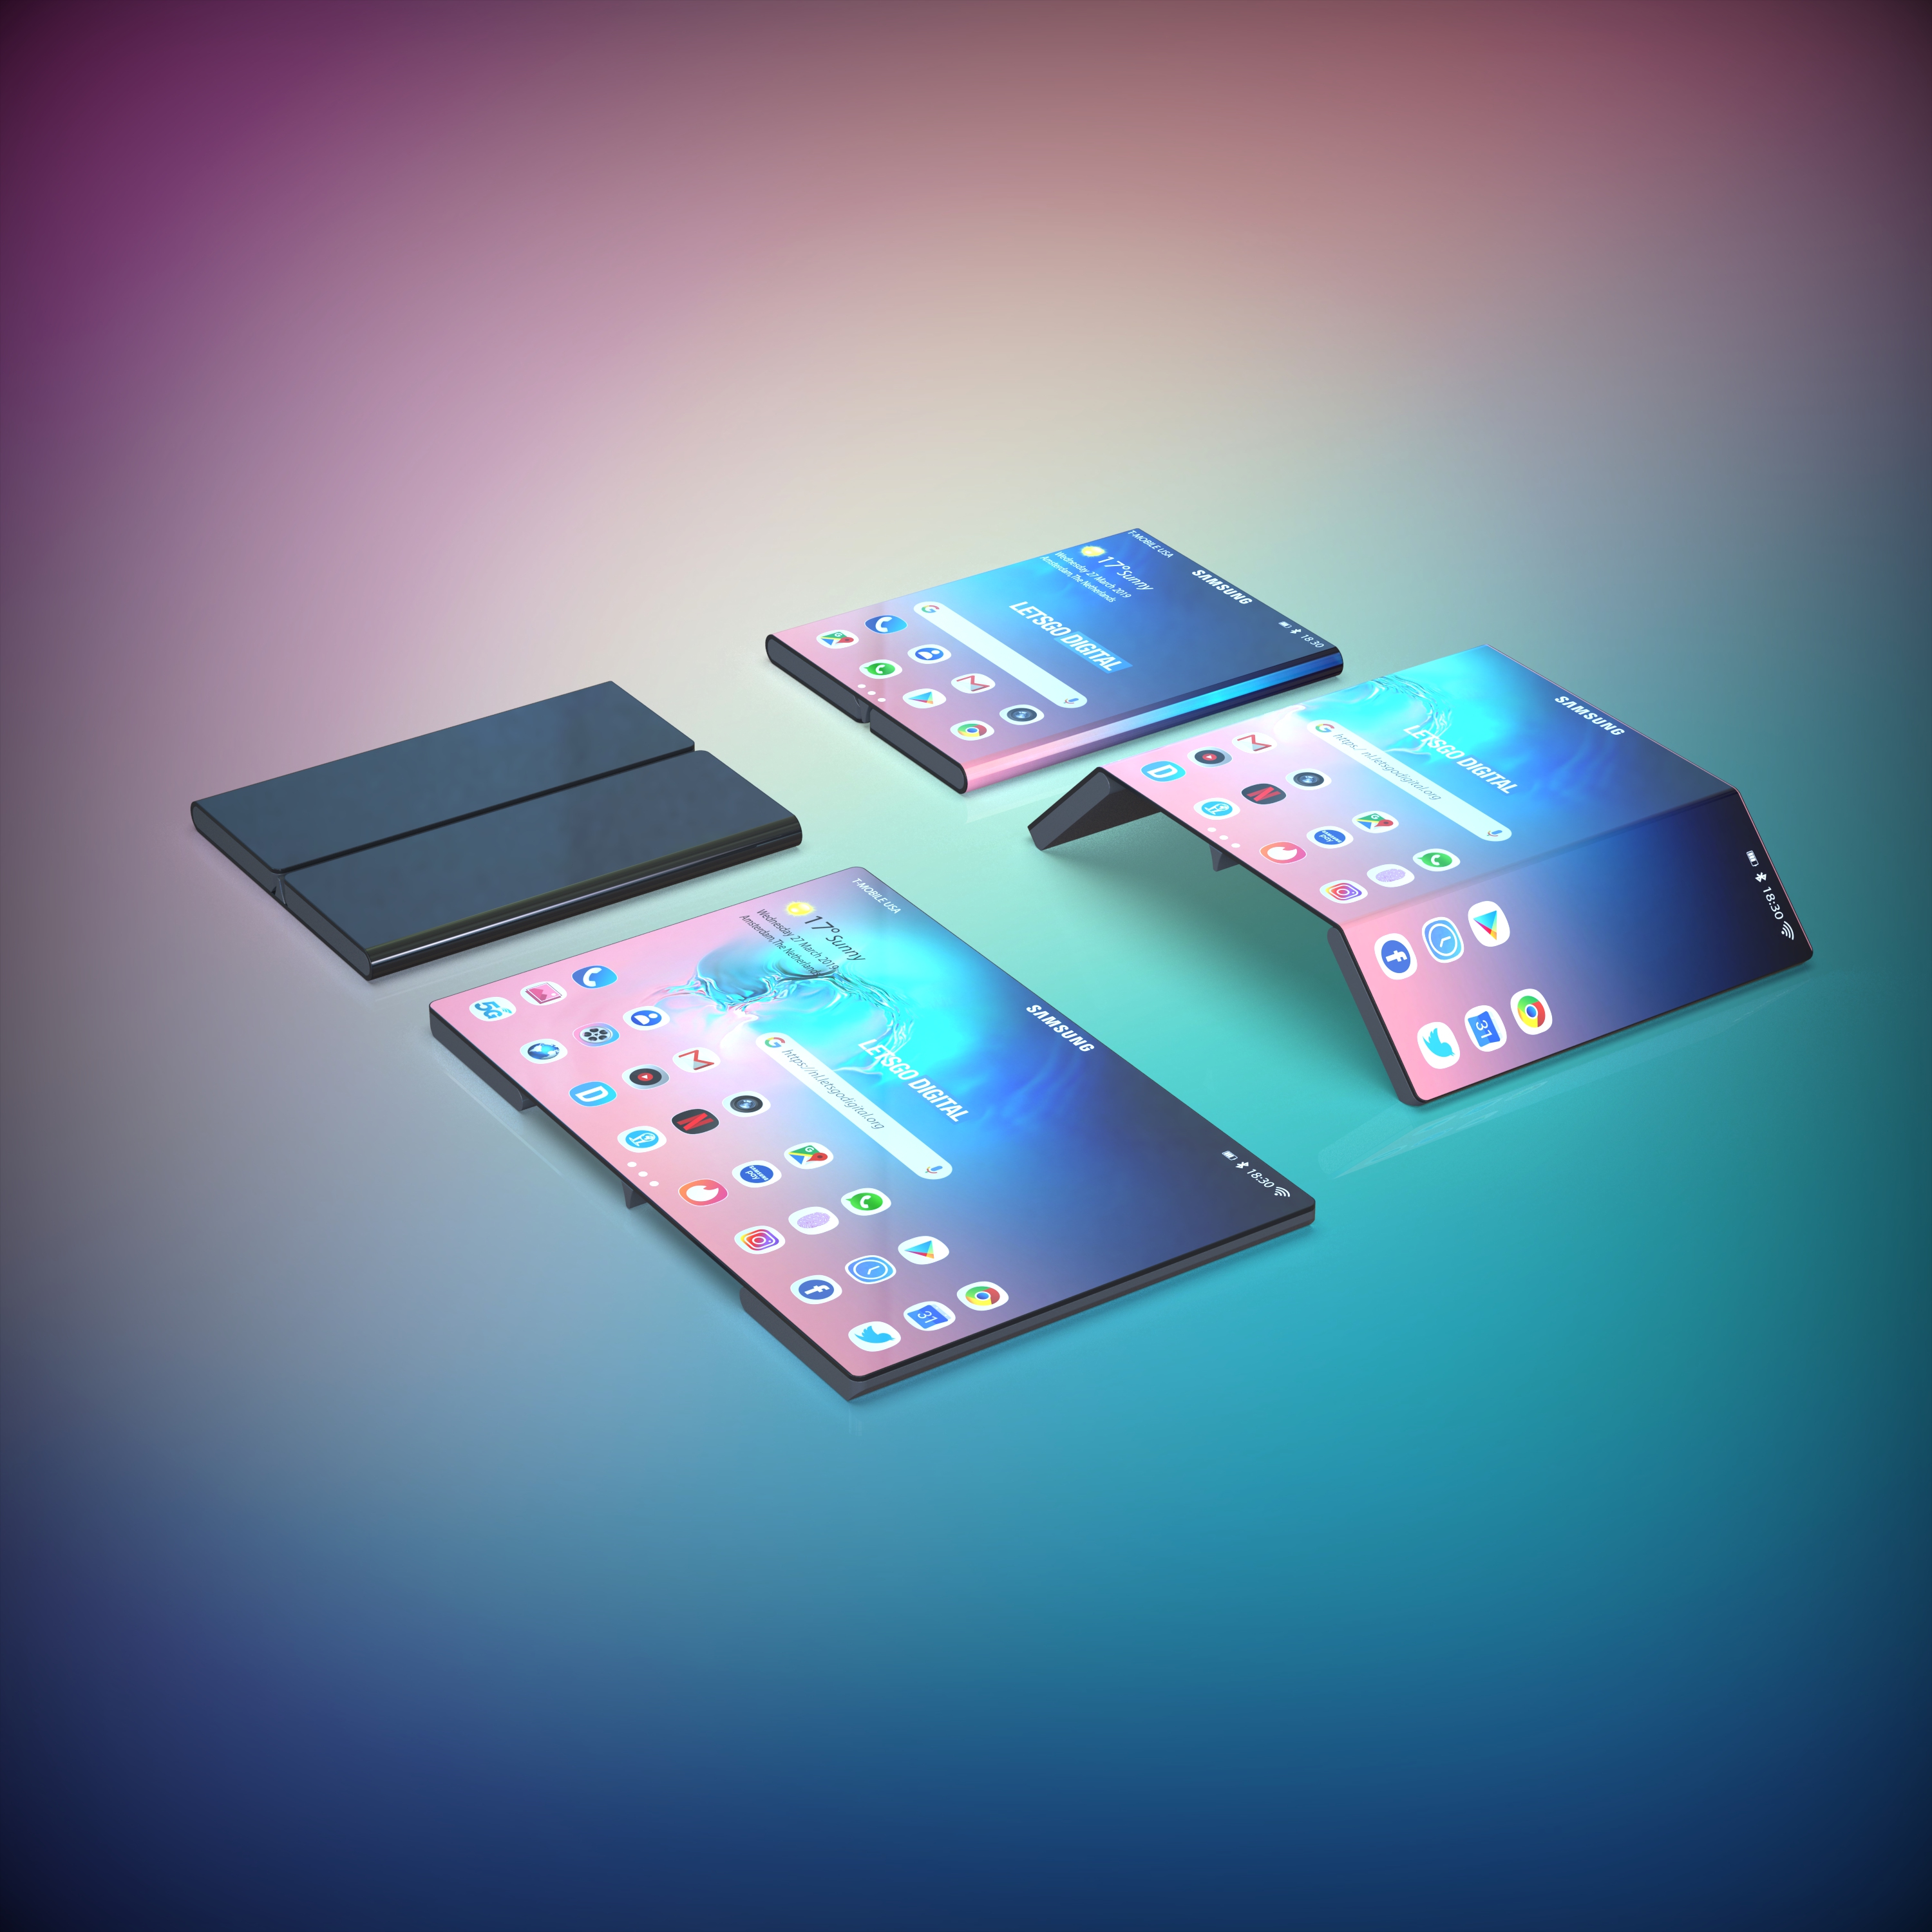 Раскладной телефон планшет. Samsung Galaxy Fold 2022. Самсунг складной смартфон 2023. Складной самсунг 2022. Складной смартфон Samsung Galaxy Fold.